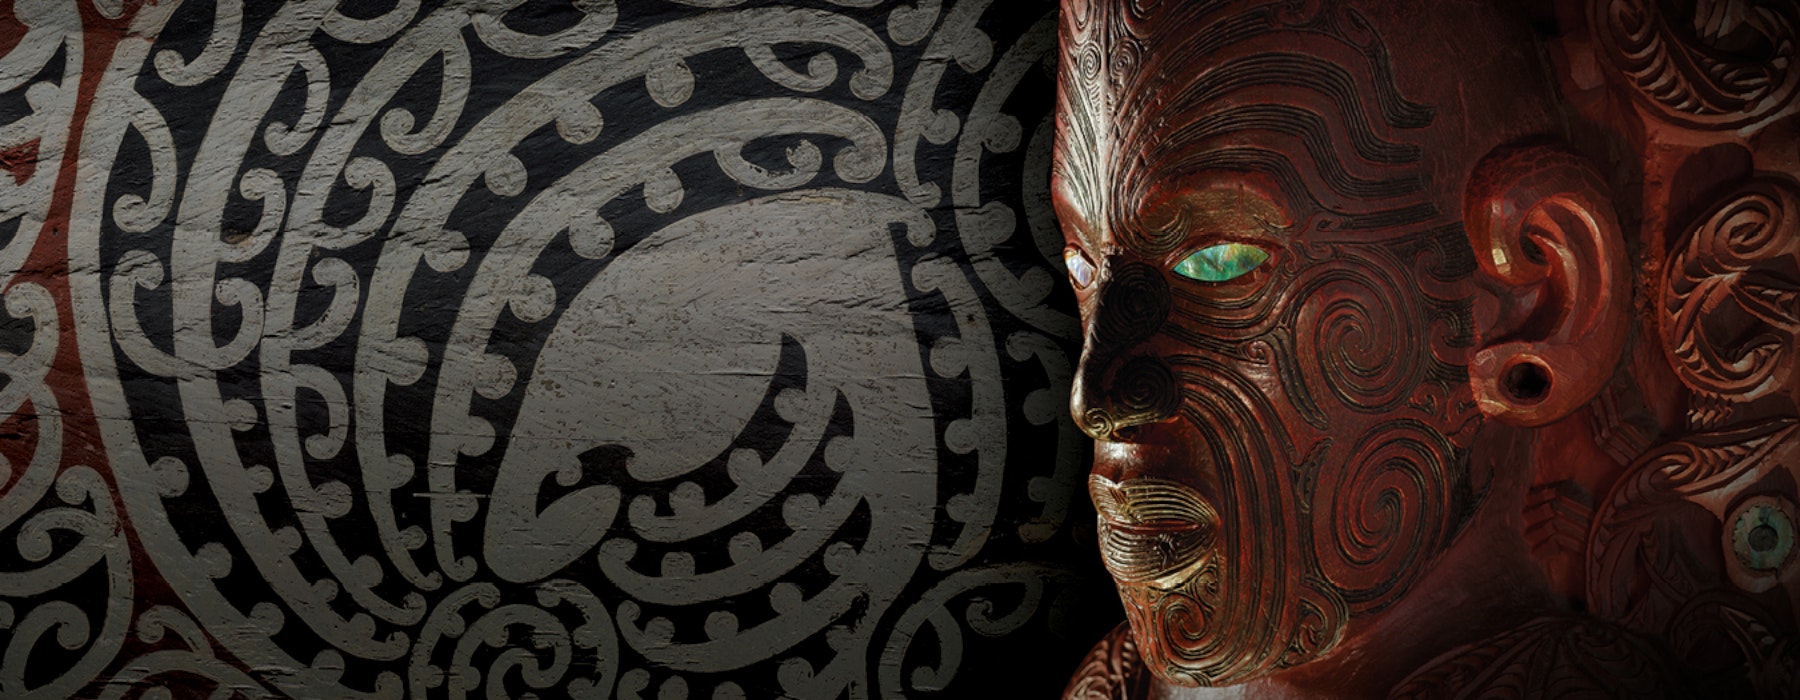 Māori designs and carving